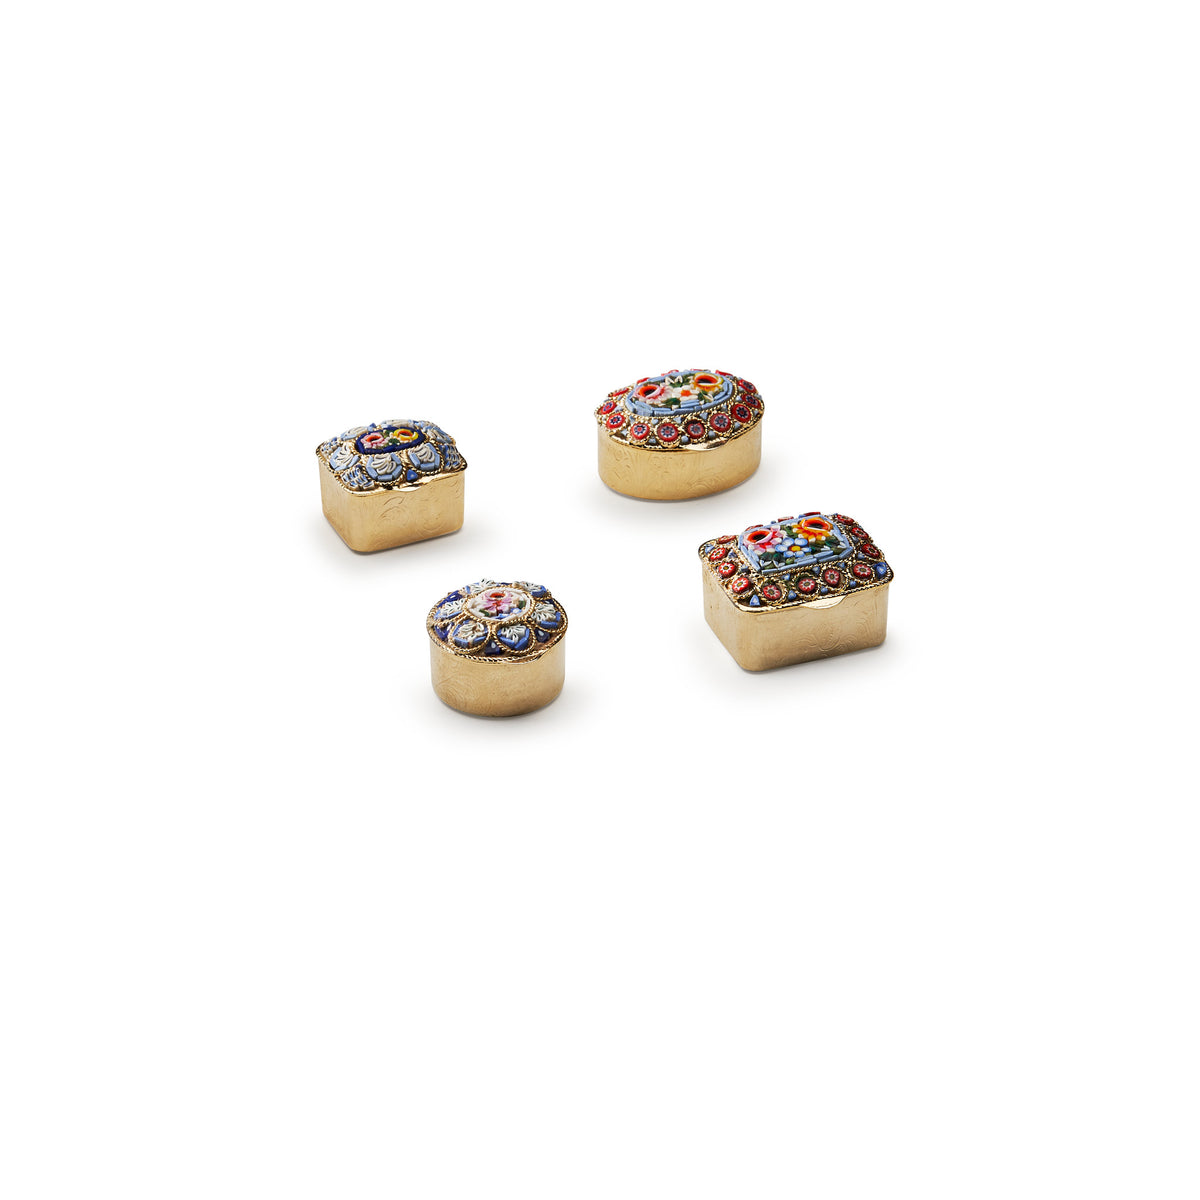 Traversari-Artisan-Mosaics-Product-Set-of-4-small-gold-plated-brass-boxes-with-glass-mosaic